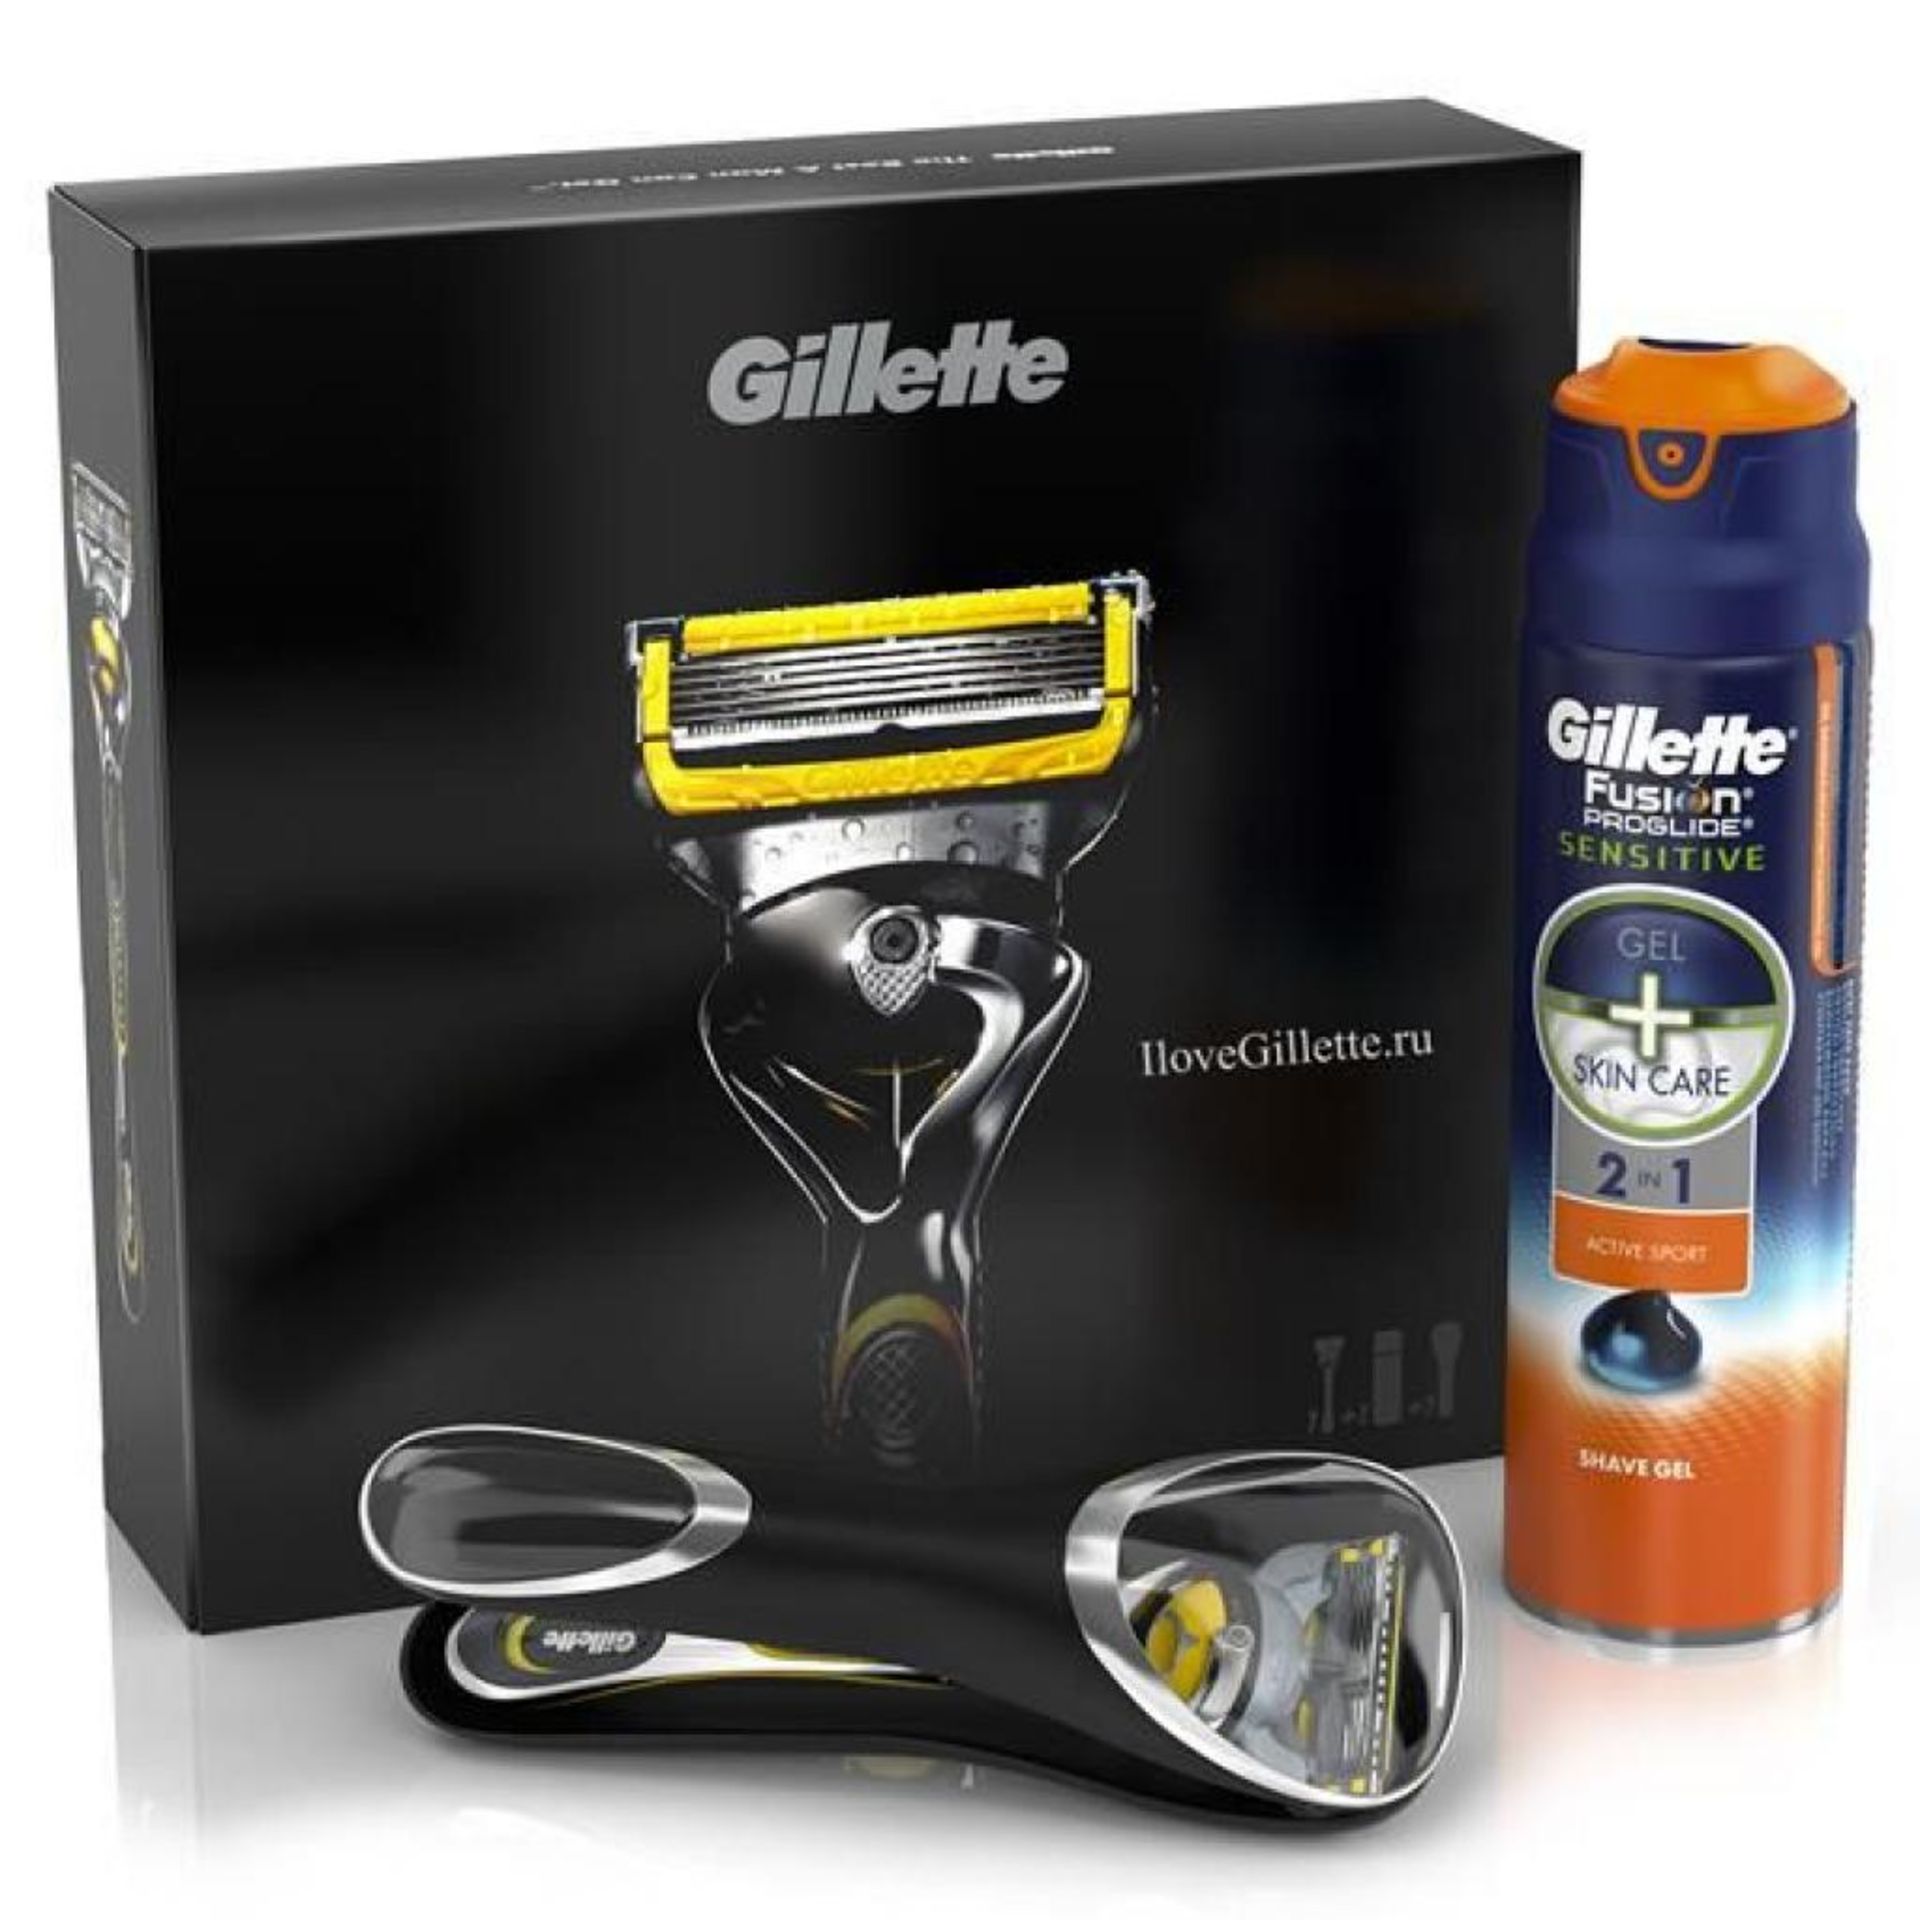 V *TRADE QTY* Brand New Gillette Fusion Proshield Razor & Holder Plus Sensitive Gel + Skincare